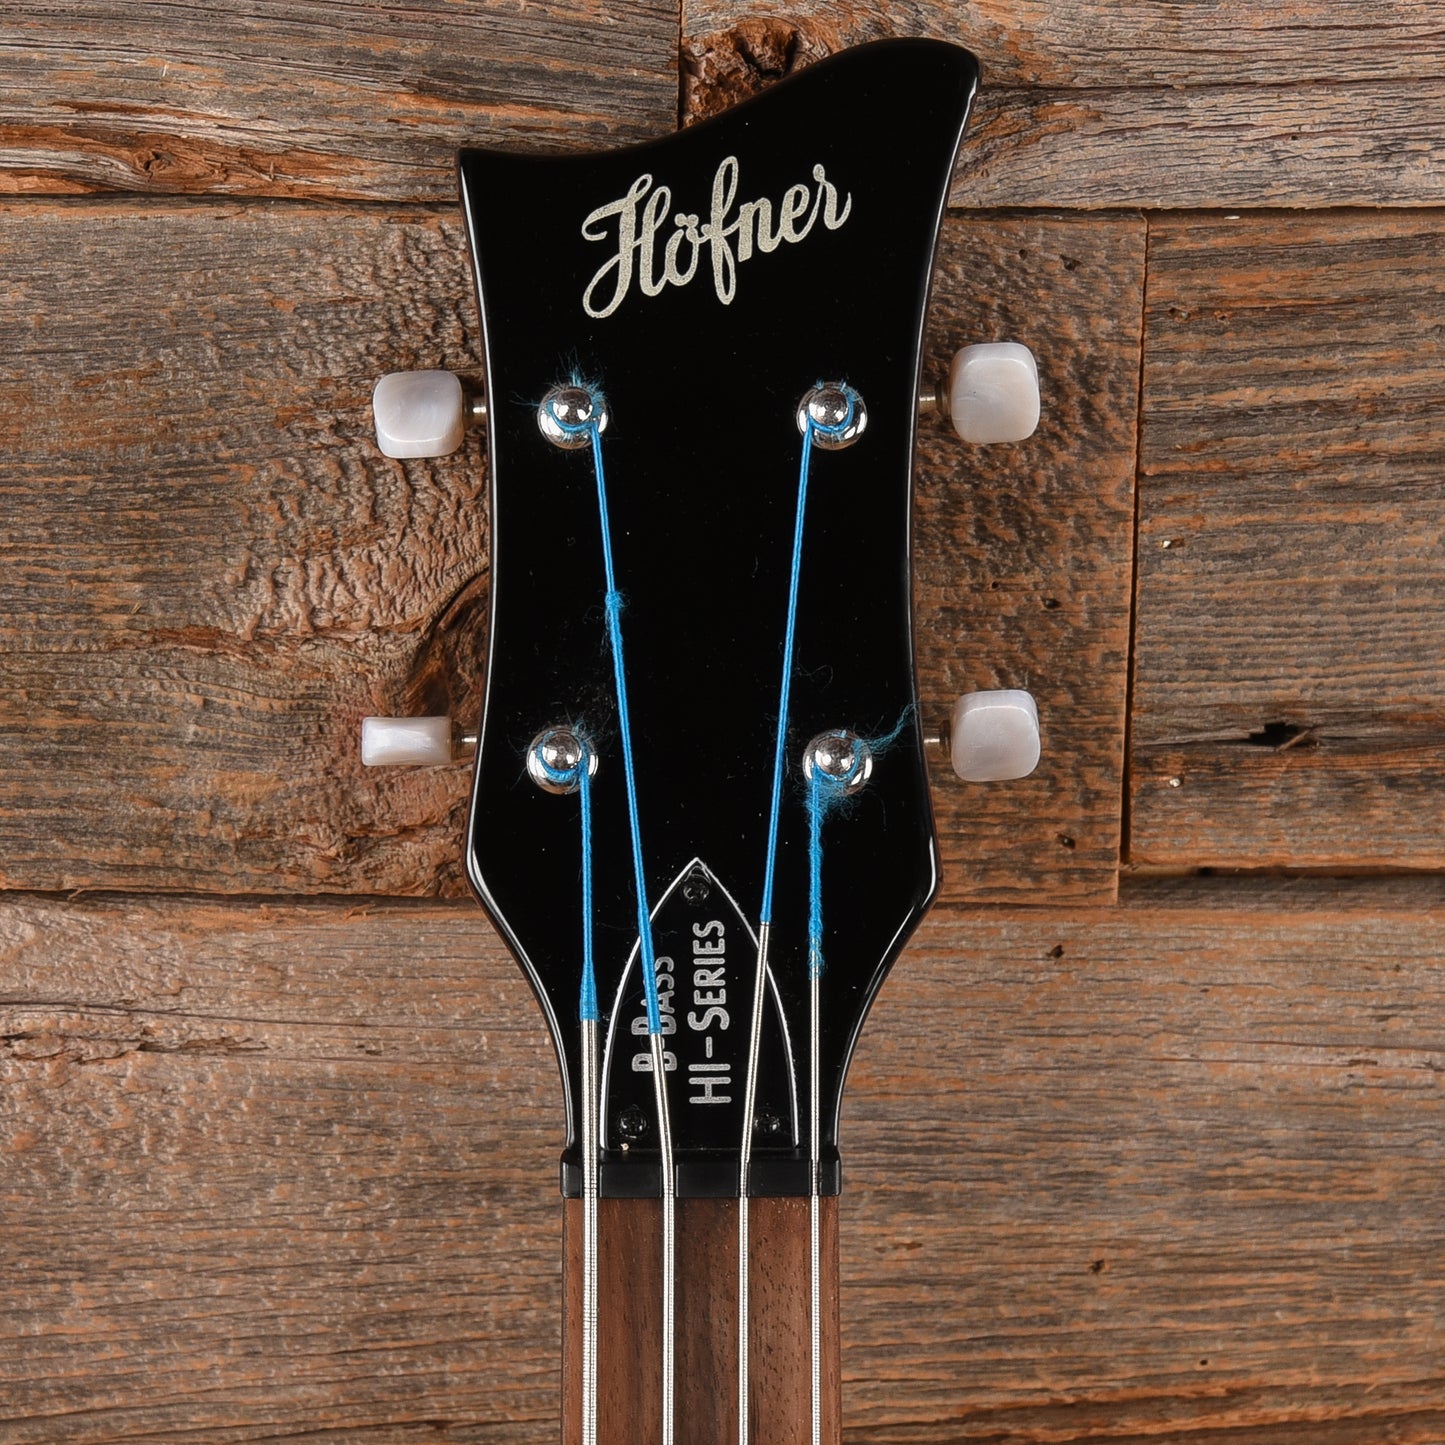 Hofner HI-BB-PE-SB Ignition Violin Bass Sunburst 2012